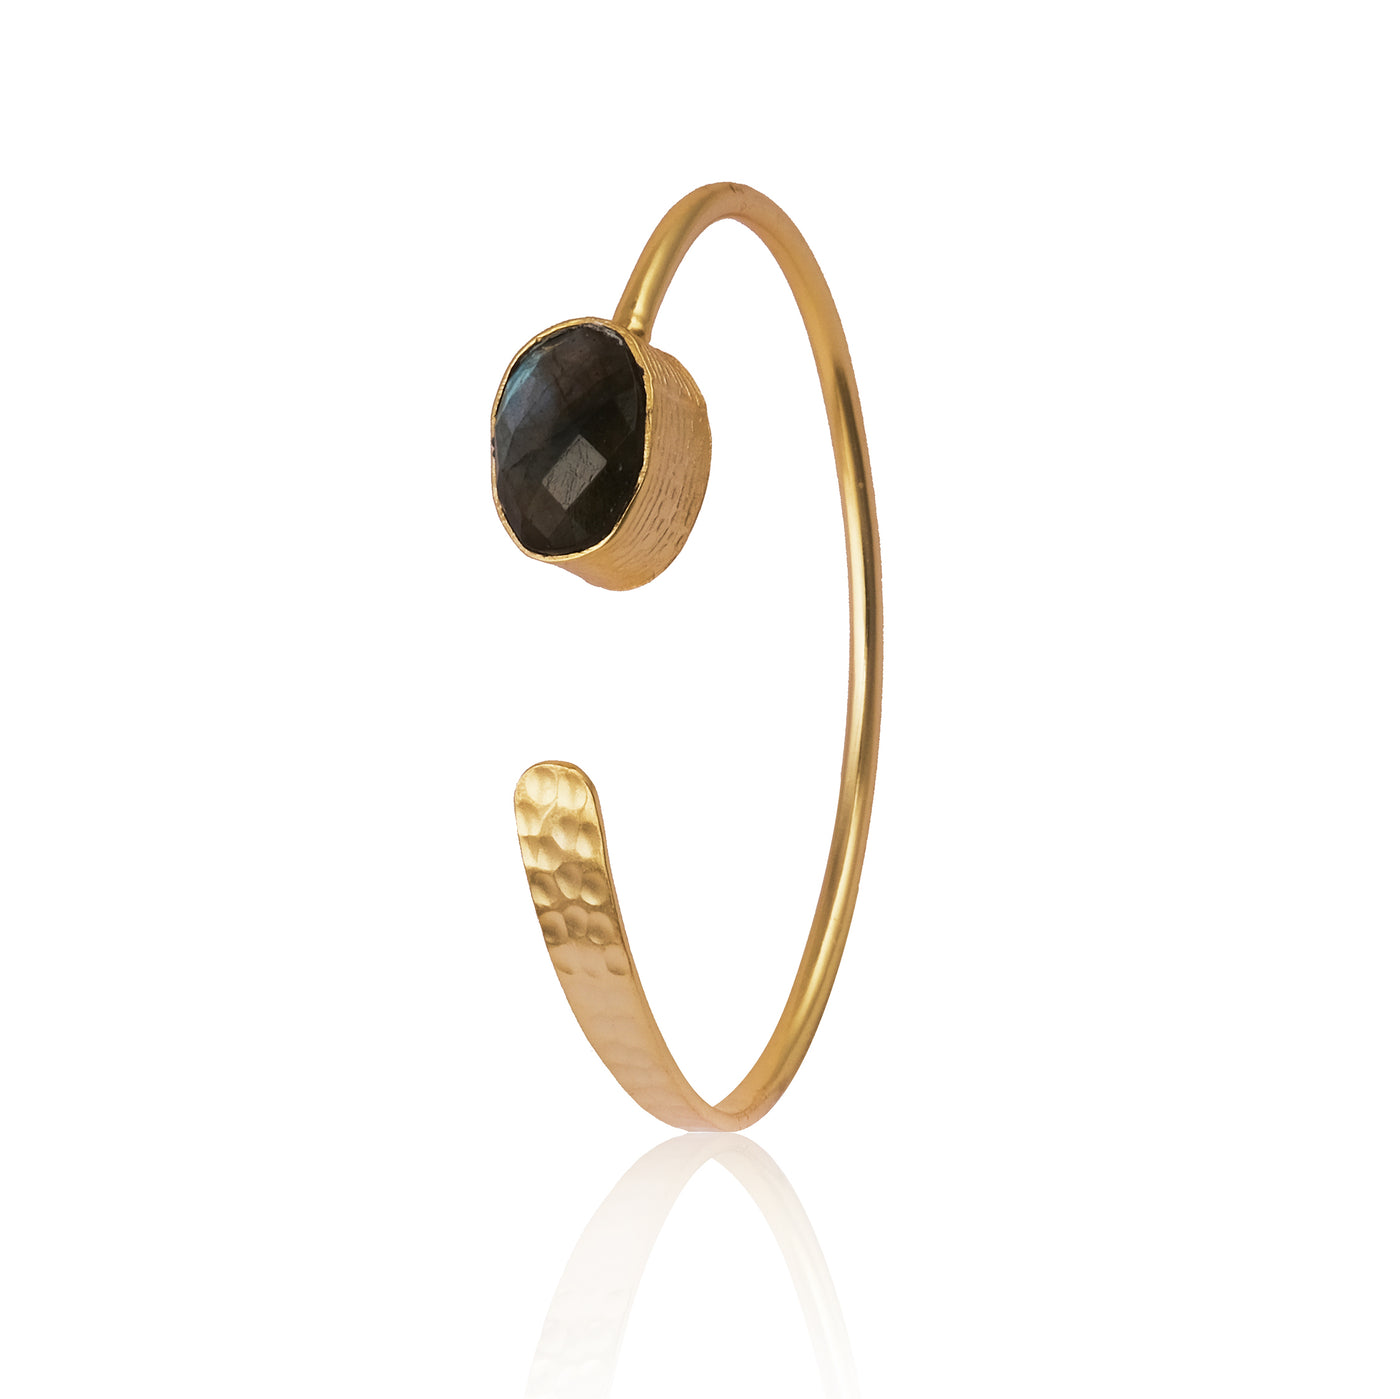 Gold Cuff Bracelet with Labradorite Accent Stone